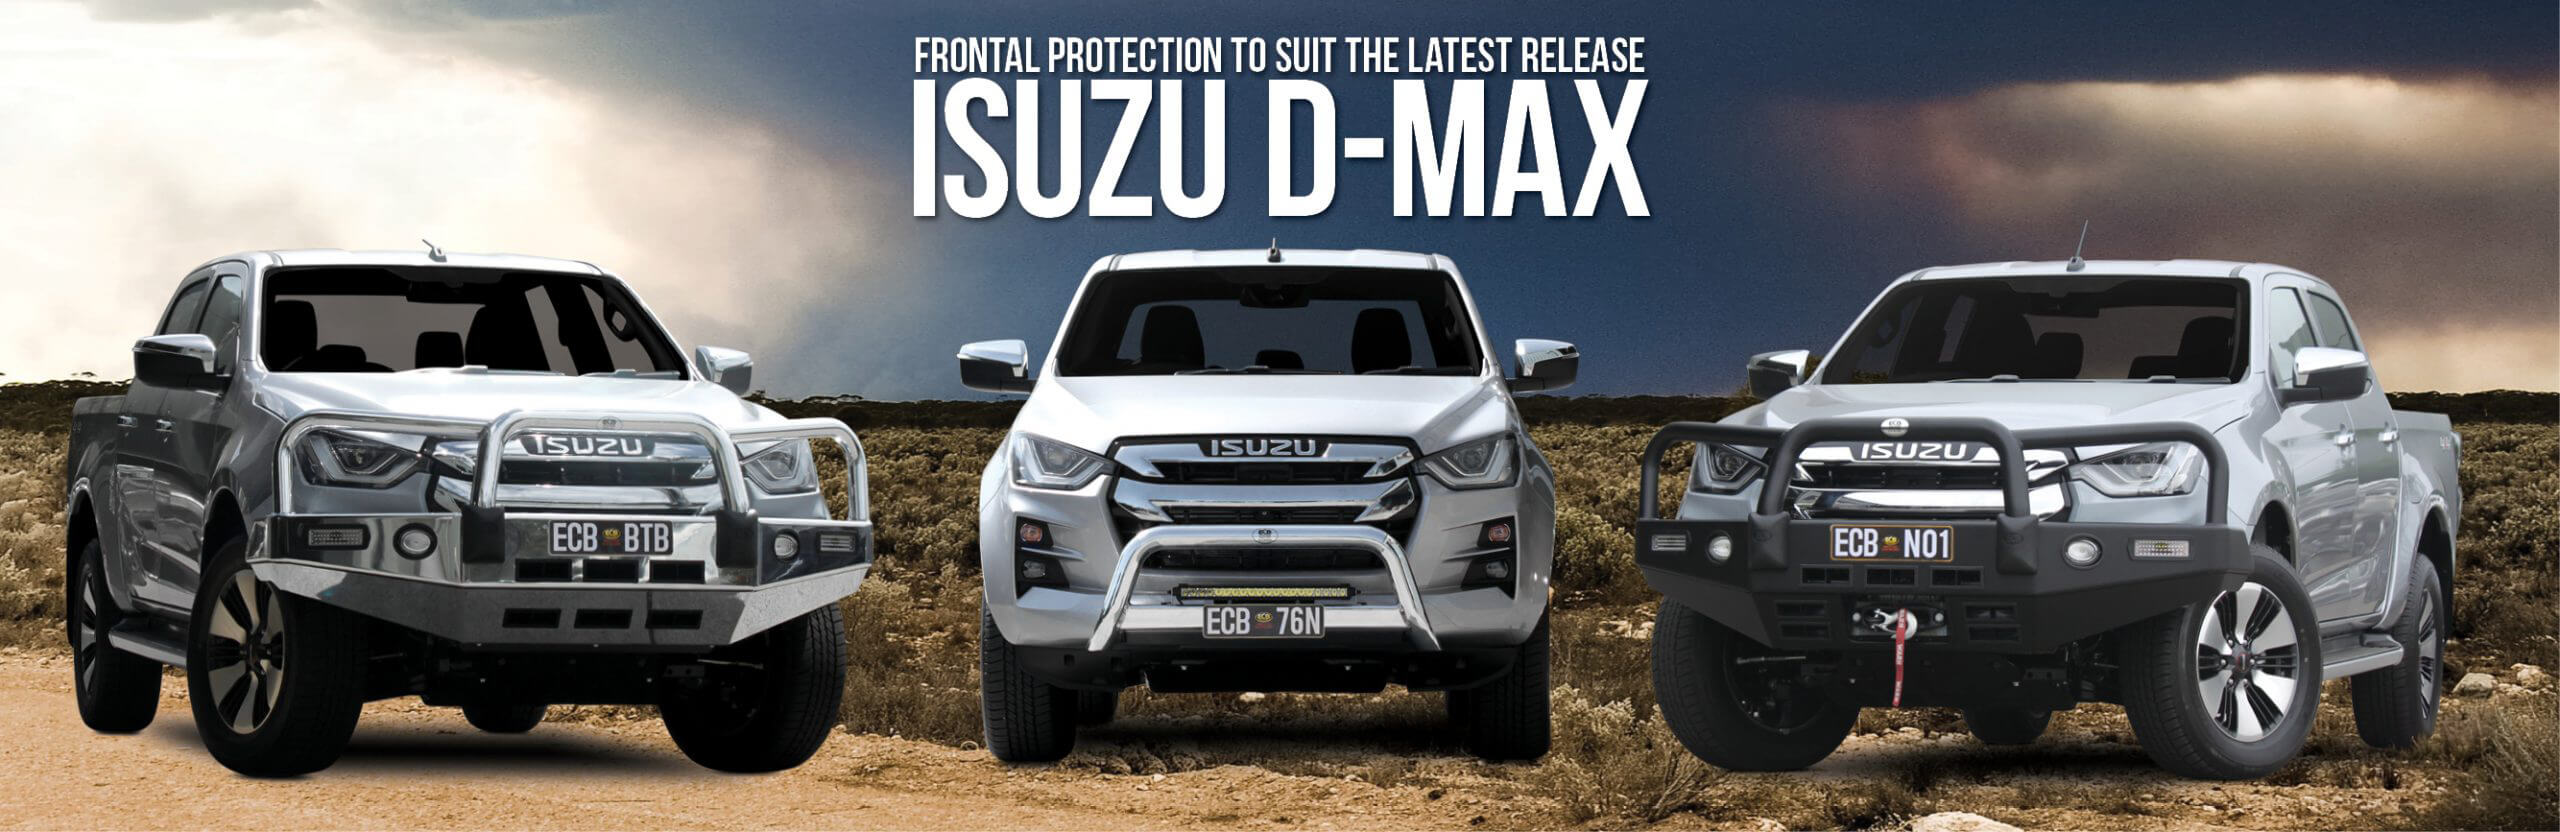 Isuzu D-max Frontal protection range